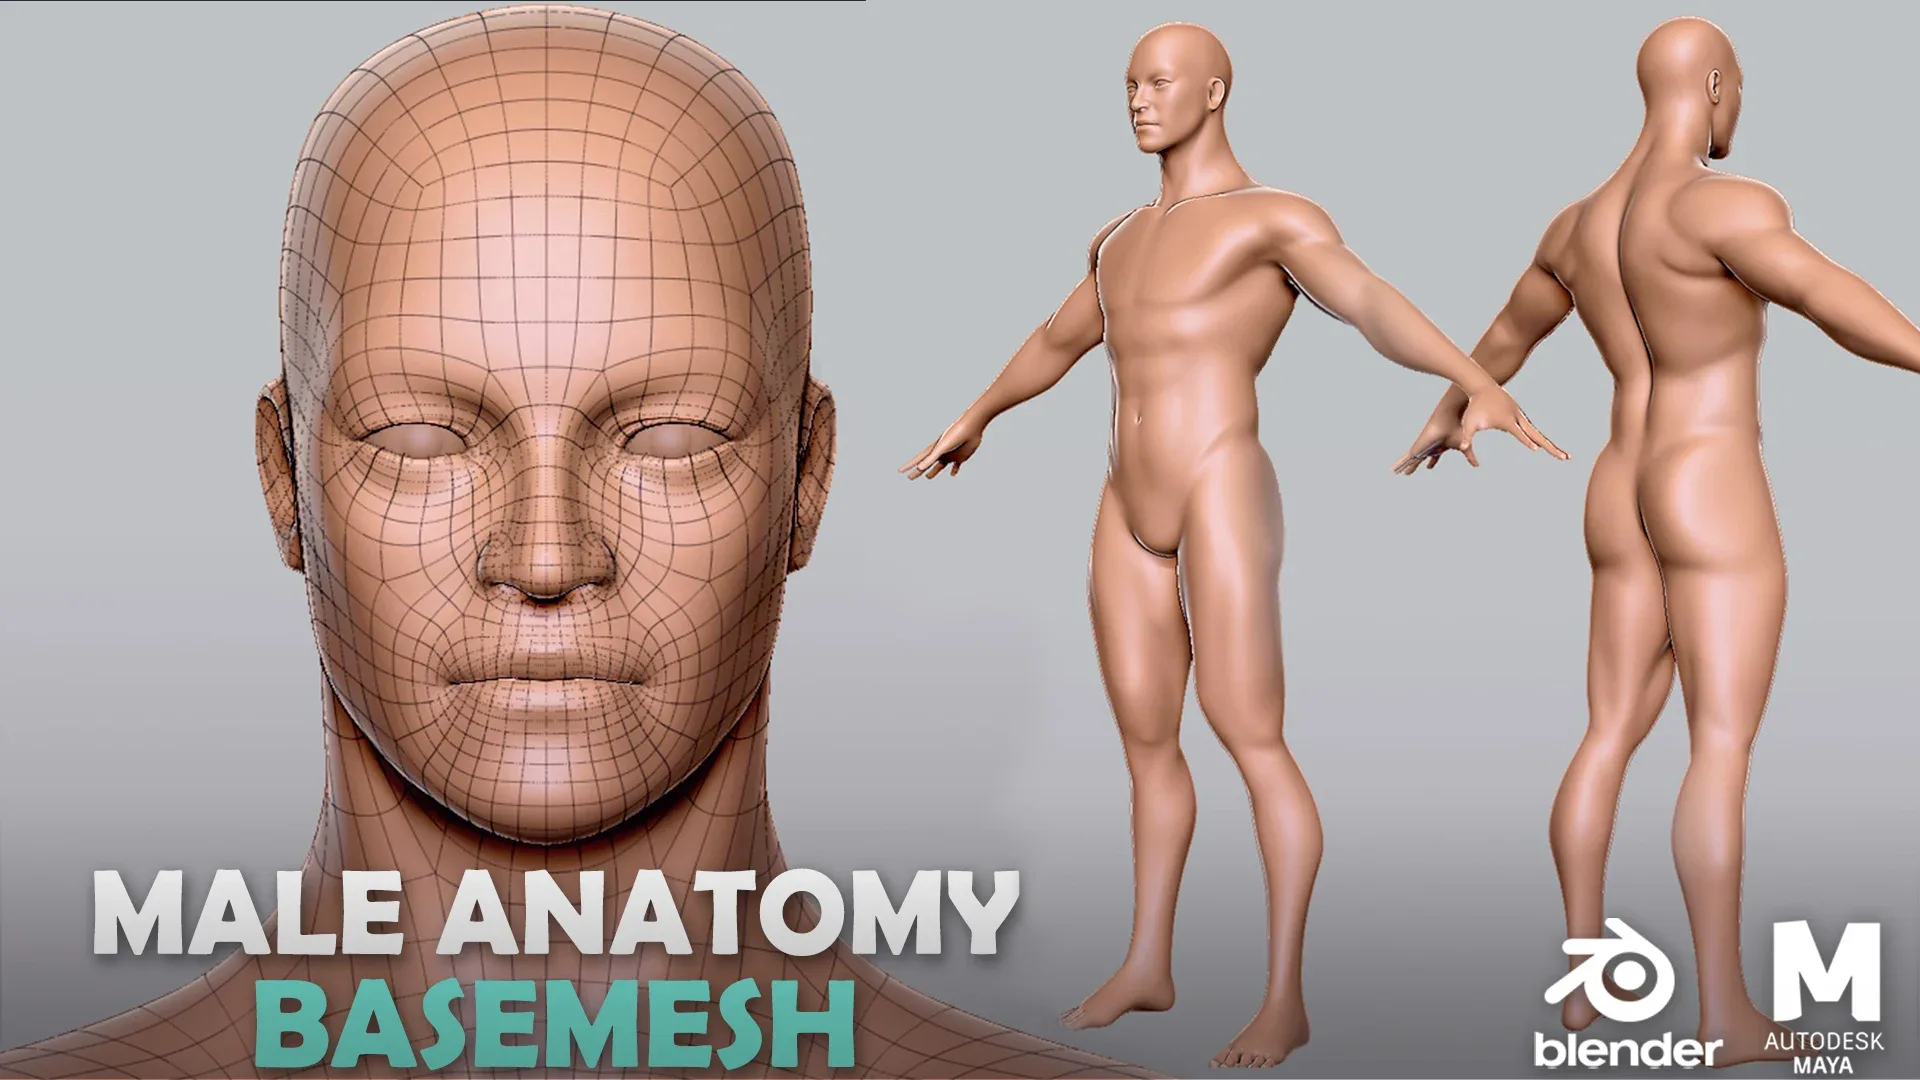 Blender - BaseMesh Male & Female Anatomy - Topology + UV Map